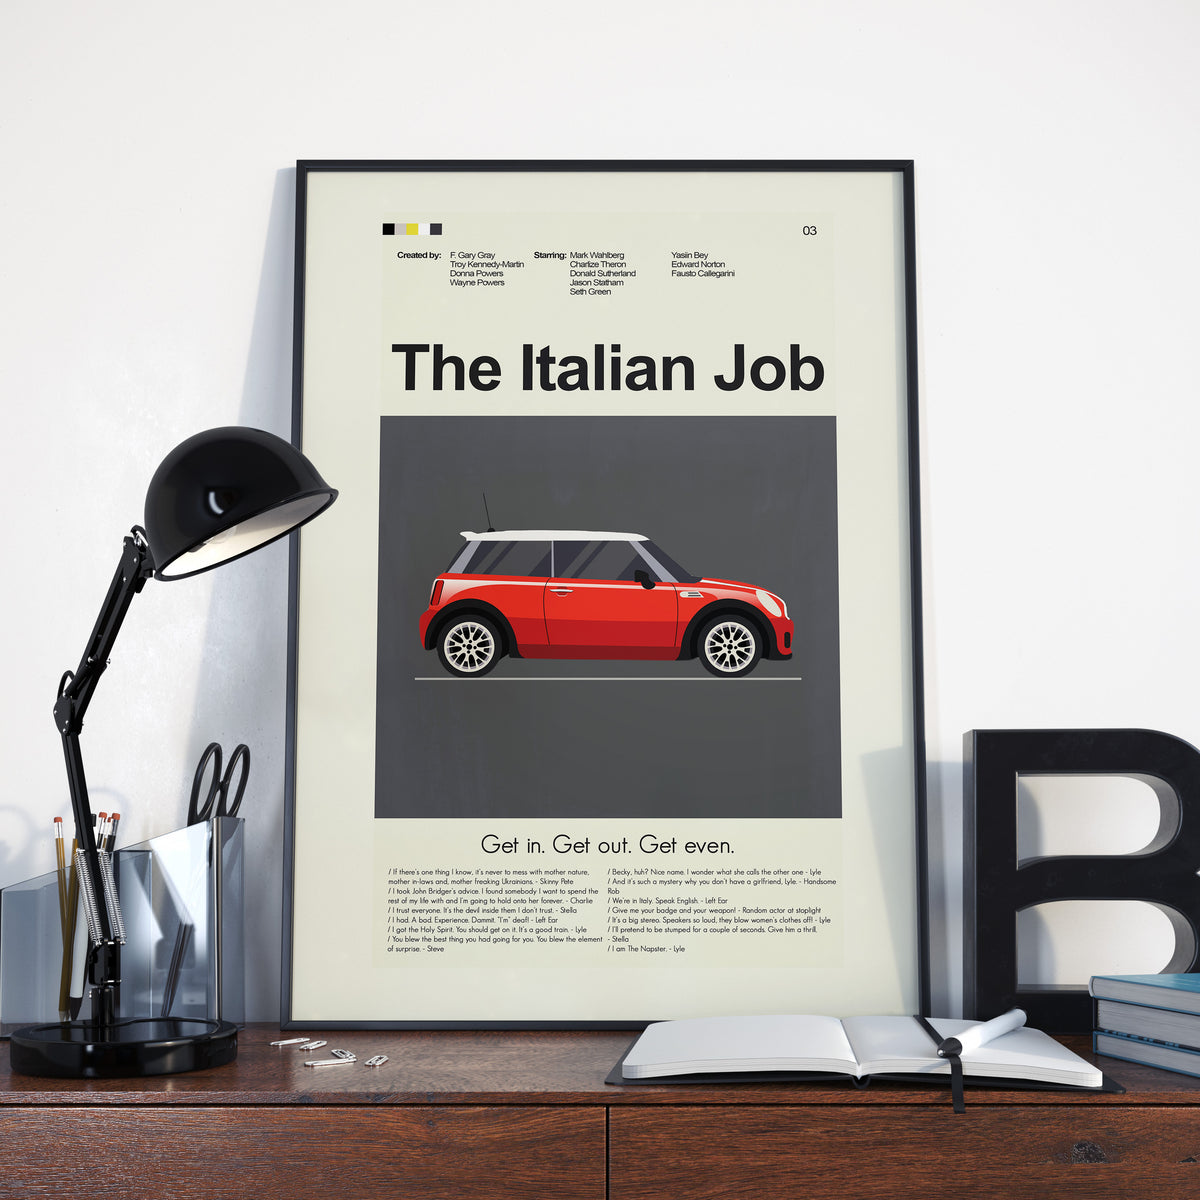 The Italian Job - Red Mini Cooper | 12"x18" Print Only